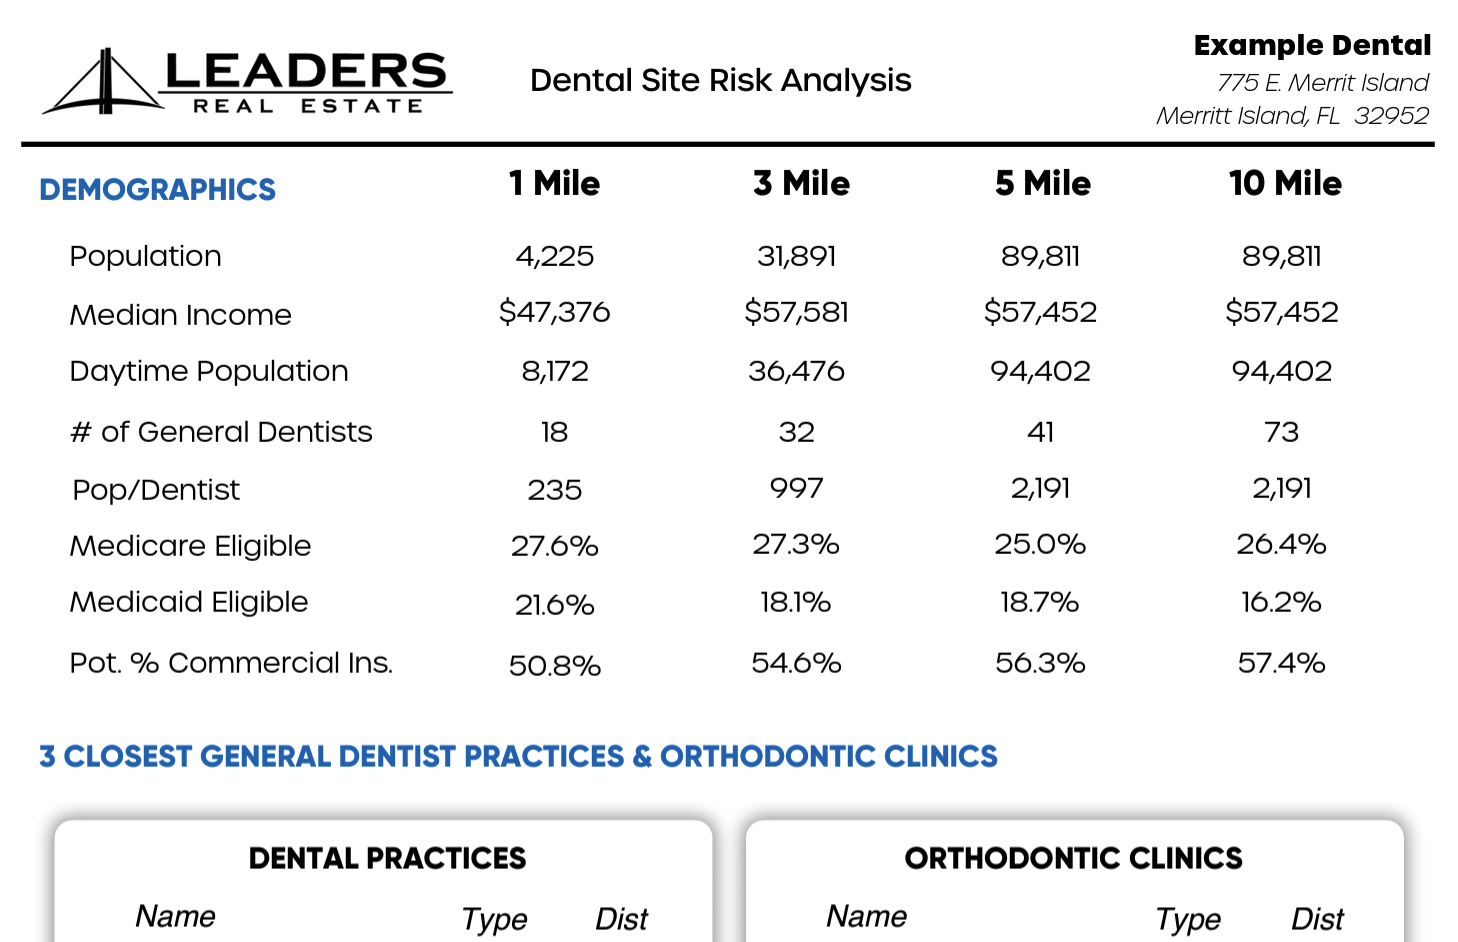 Leaders Real Estate Dental Site Risk Analysis